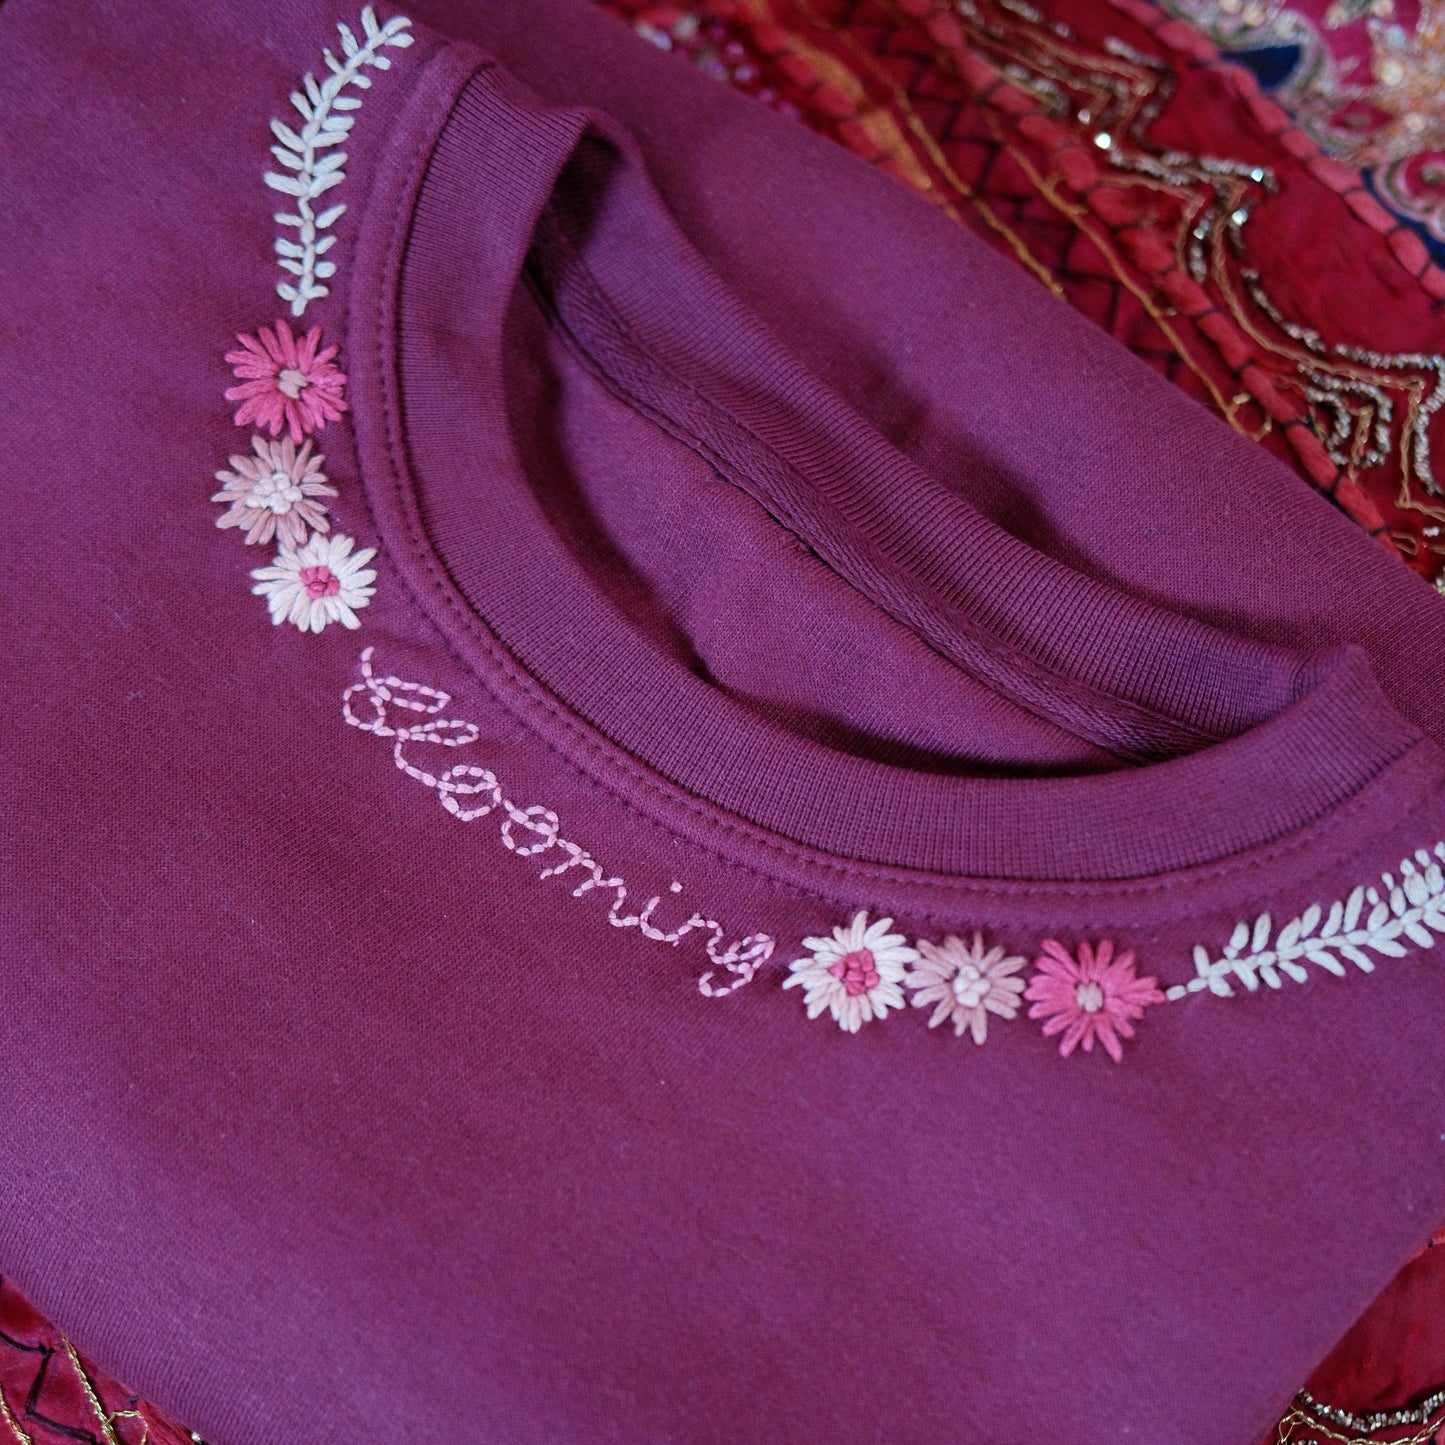 blooming hand-embroidered sweatshirt - burgundy